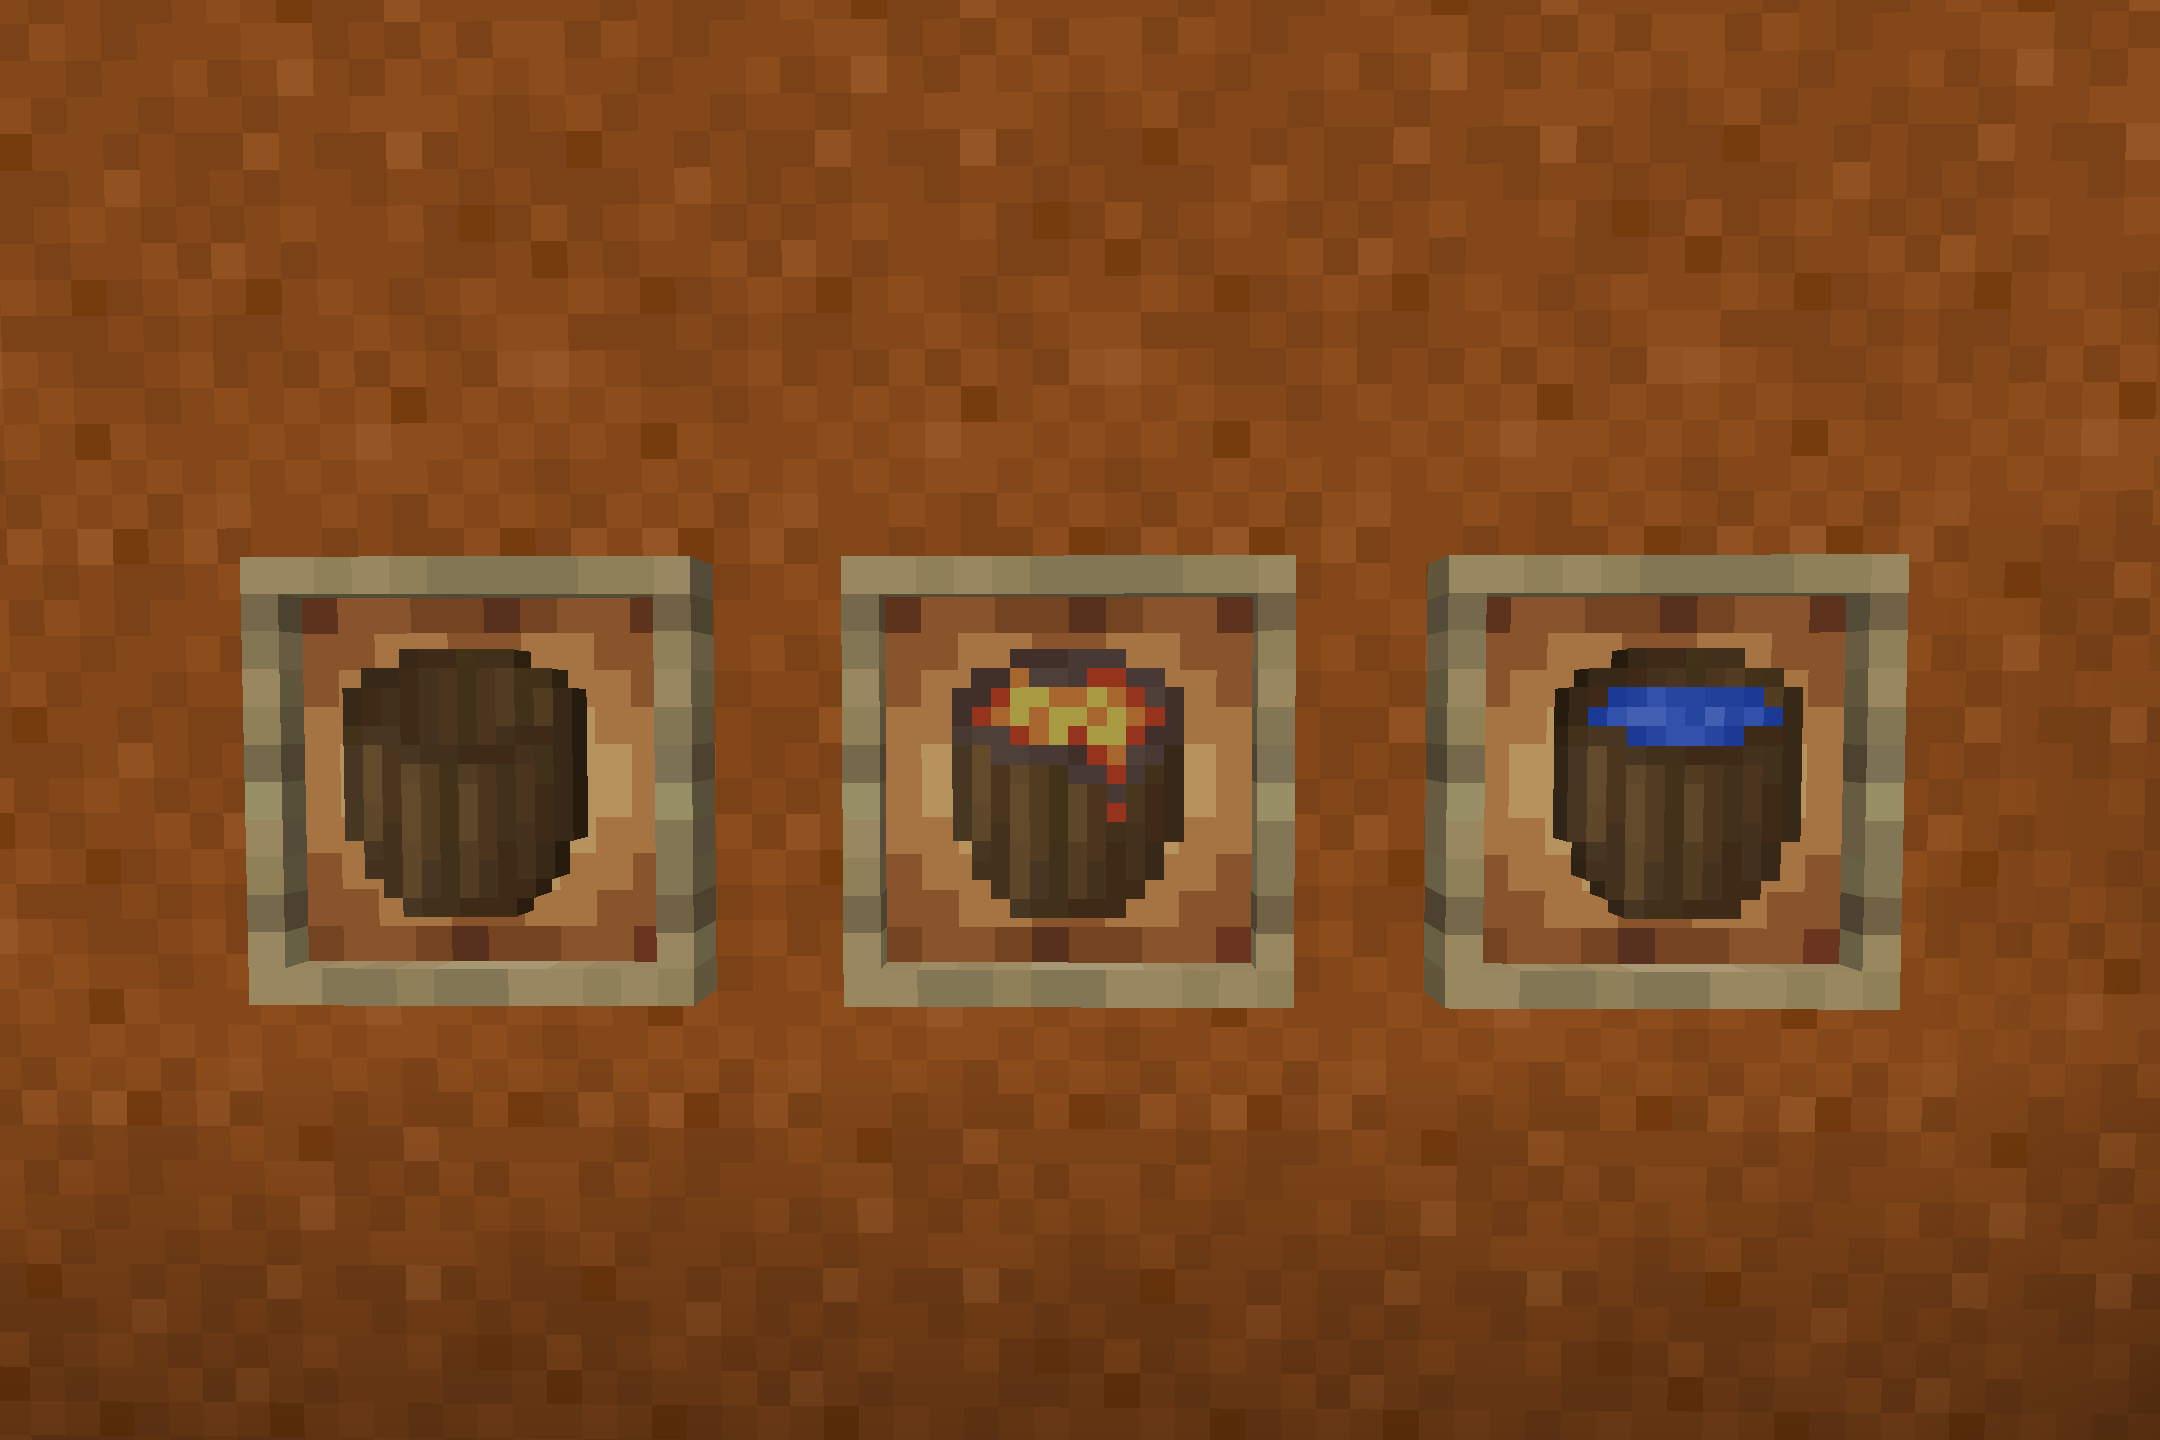 Wooden Buckets